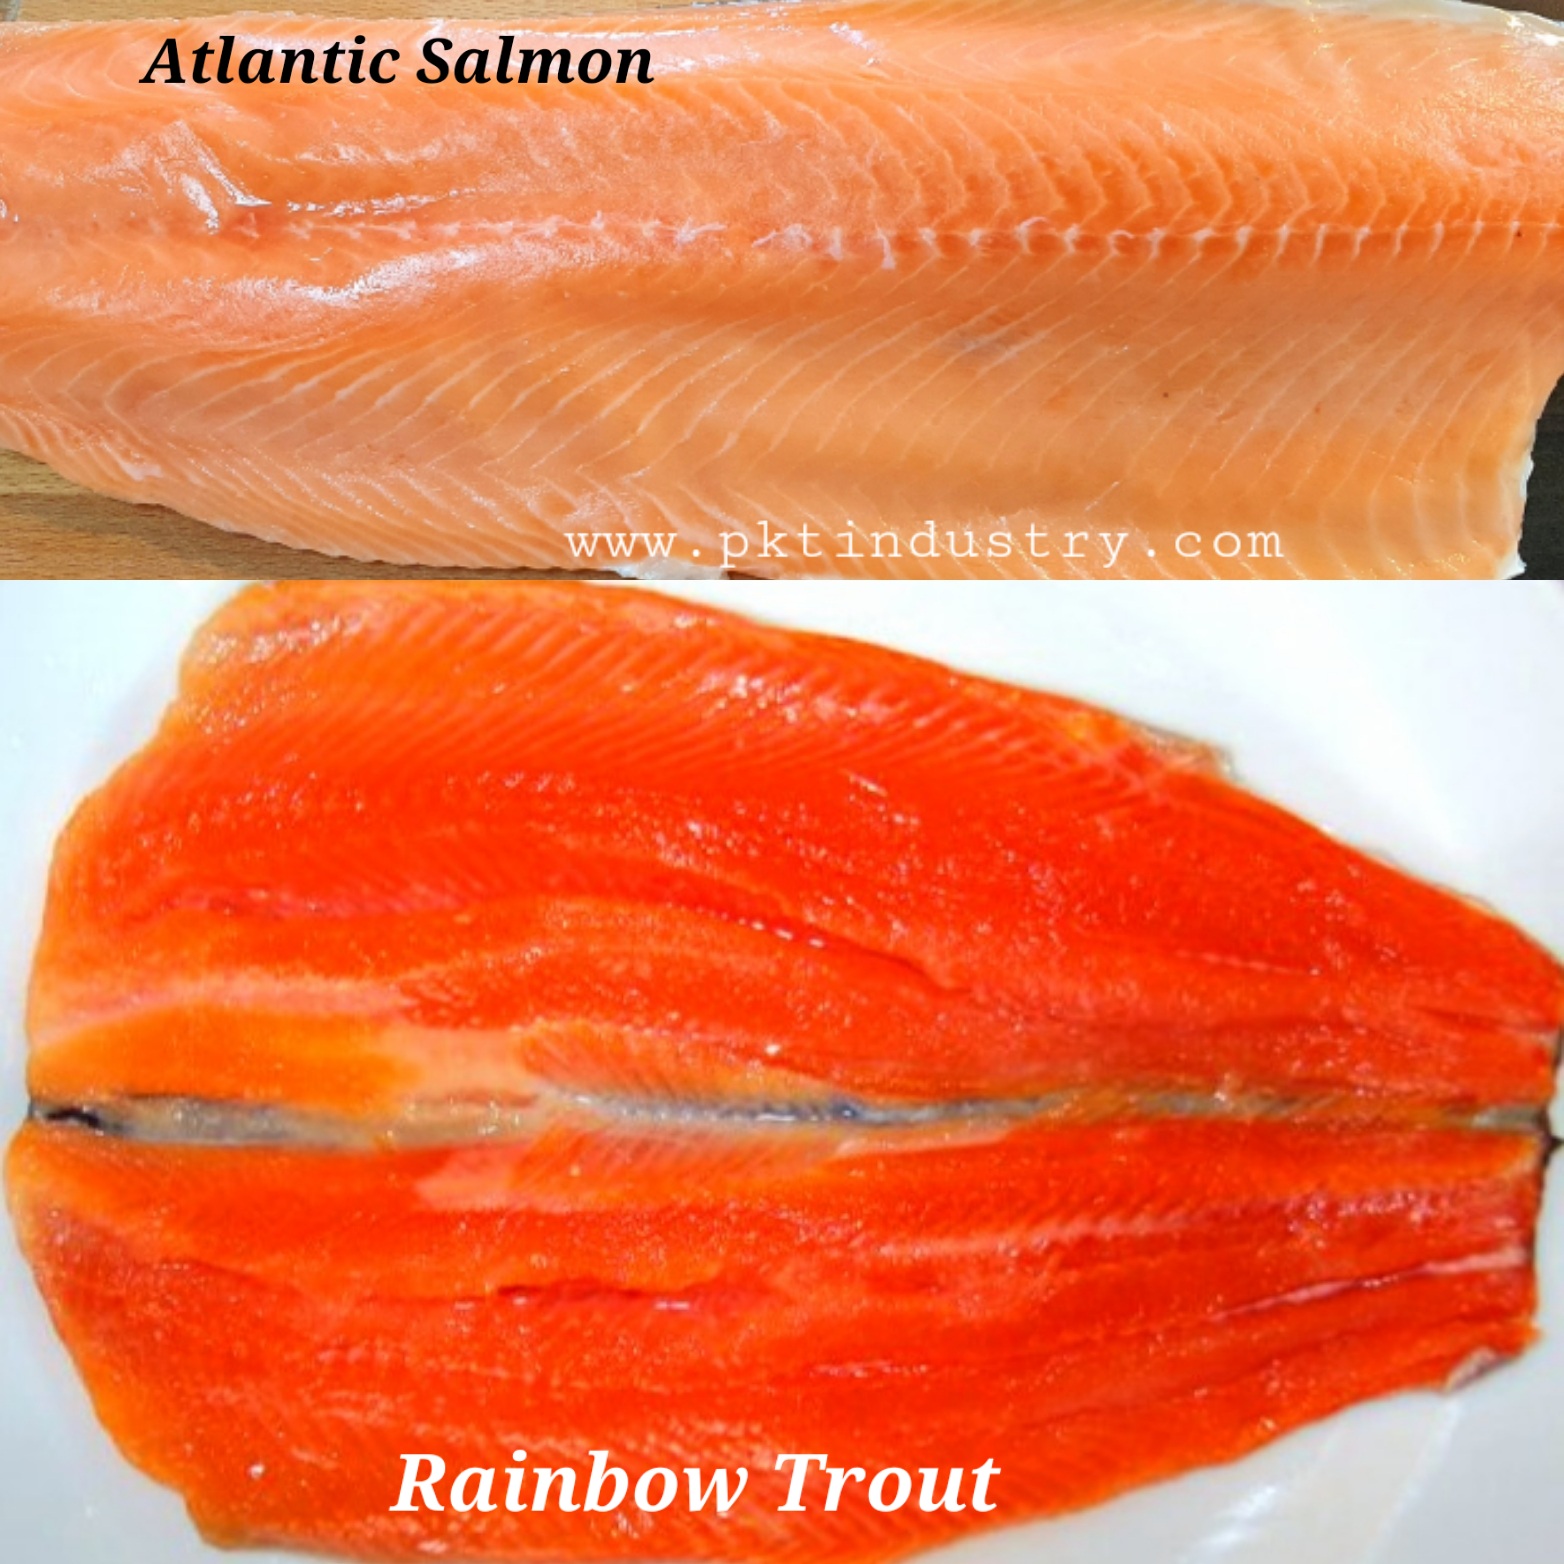 Norwegian Salmon(Atlantic Salmon) Vs Rainbow Trout